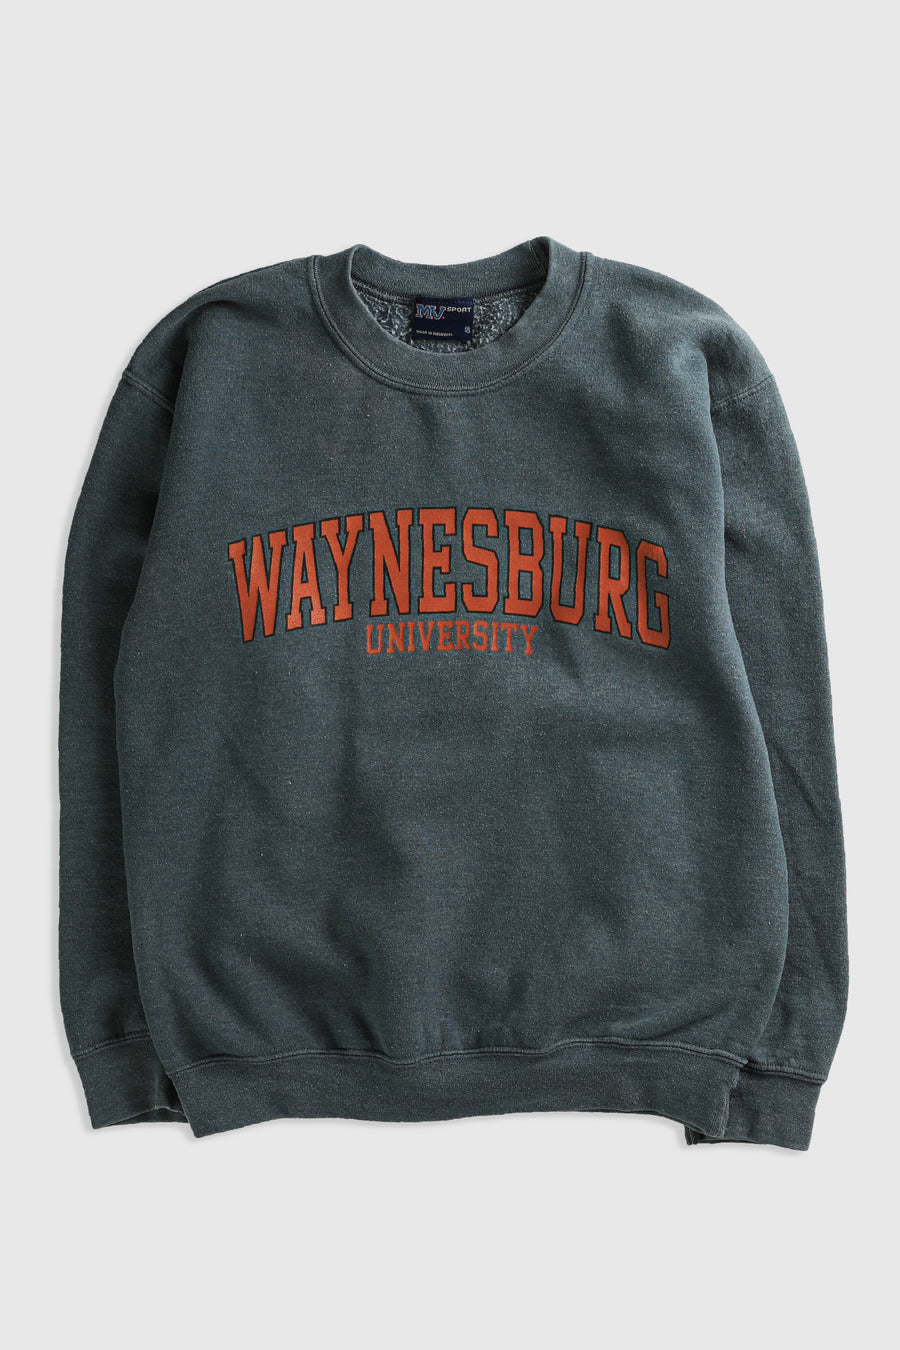 Vintage Waynesburg Sweatshirt